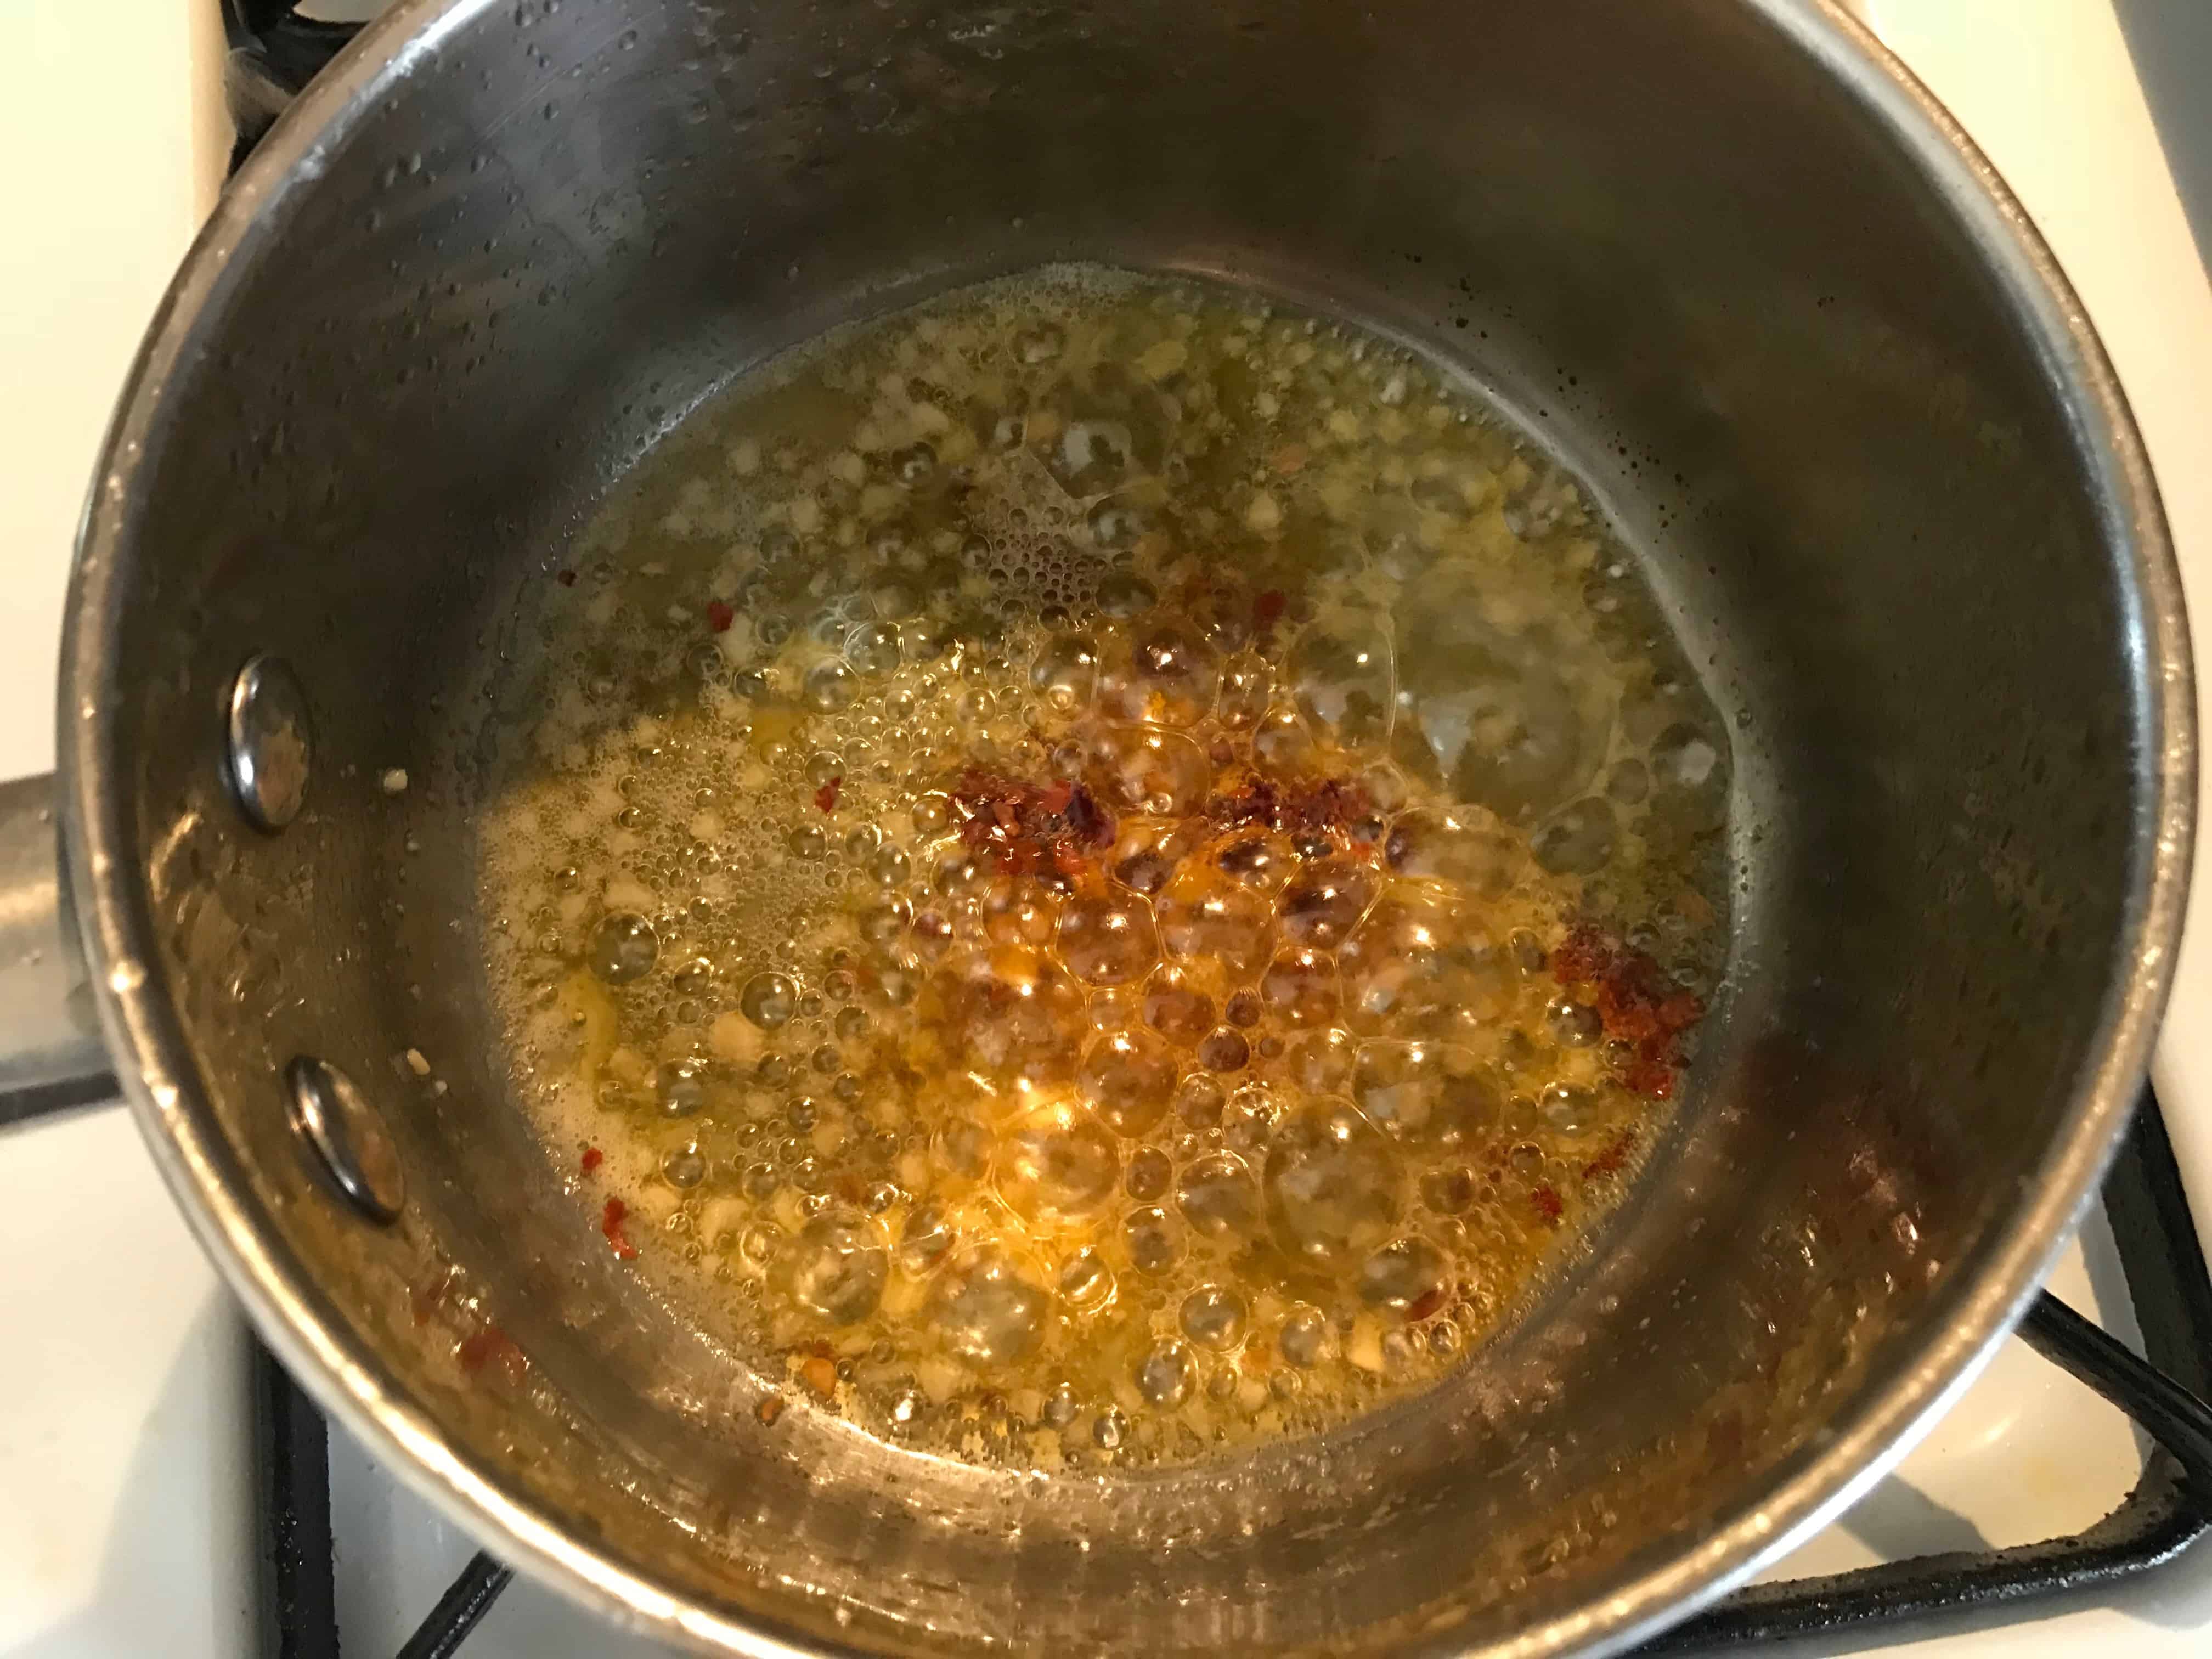 Adding garlic and seasoning to hot butter